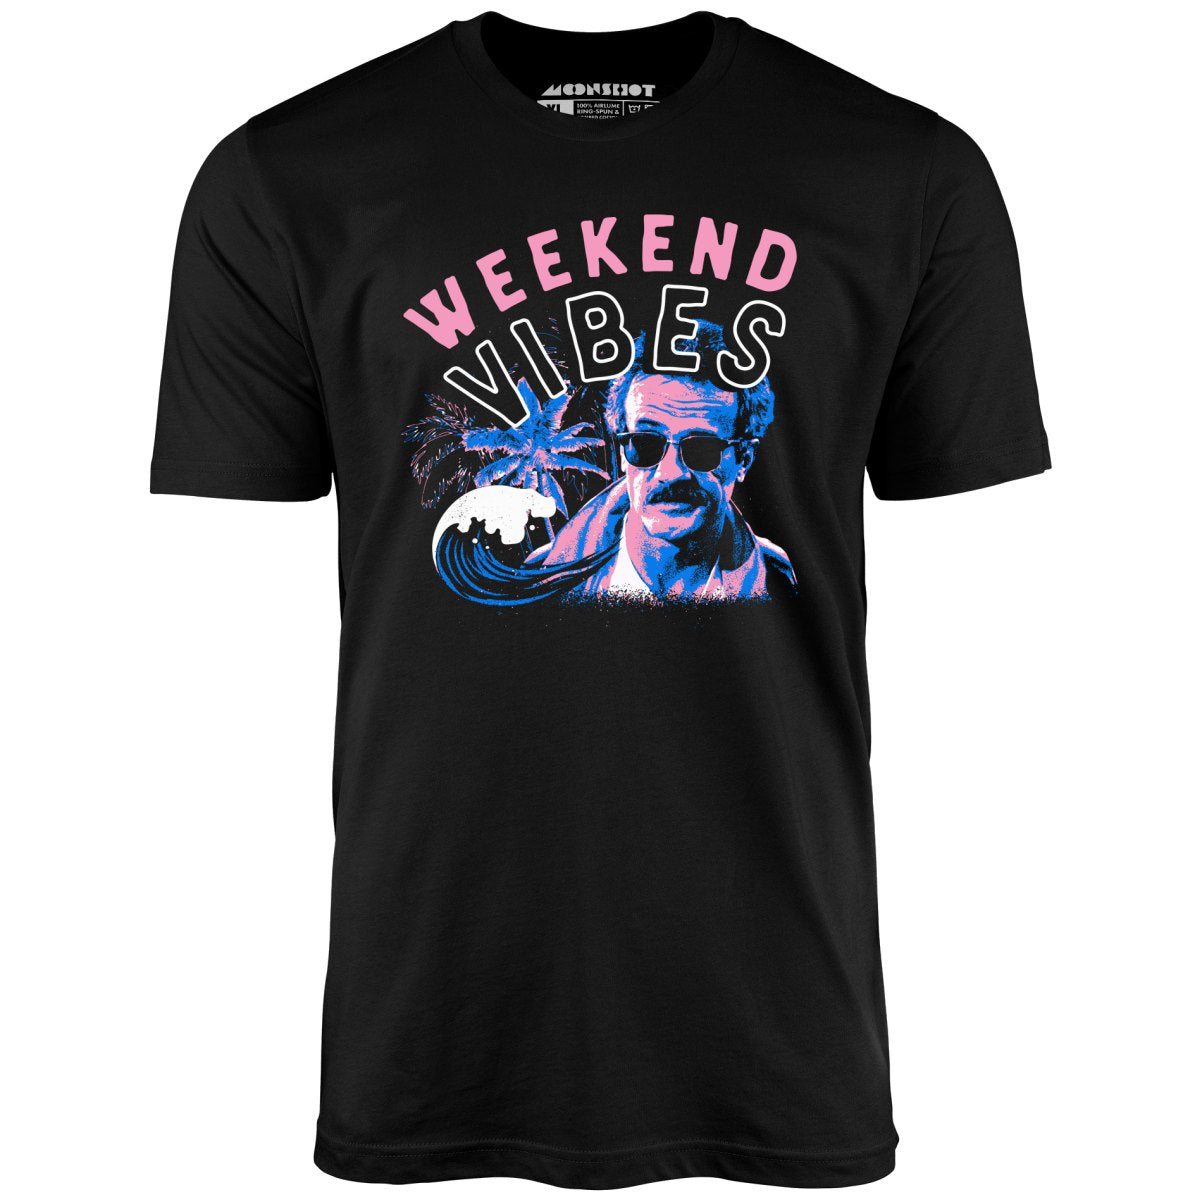 Weekend Vibes - Unisex T-Shirt